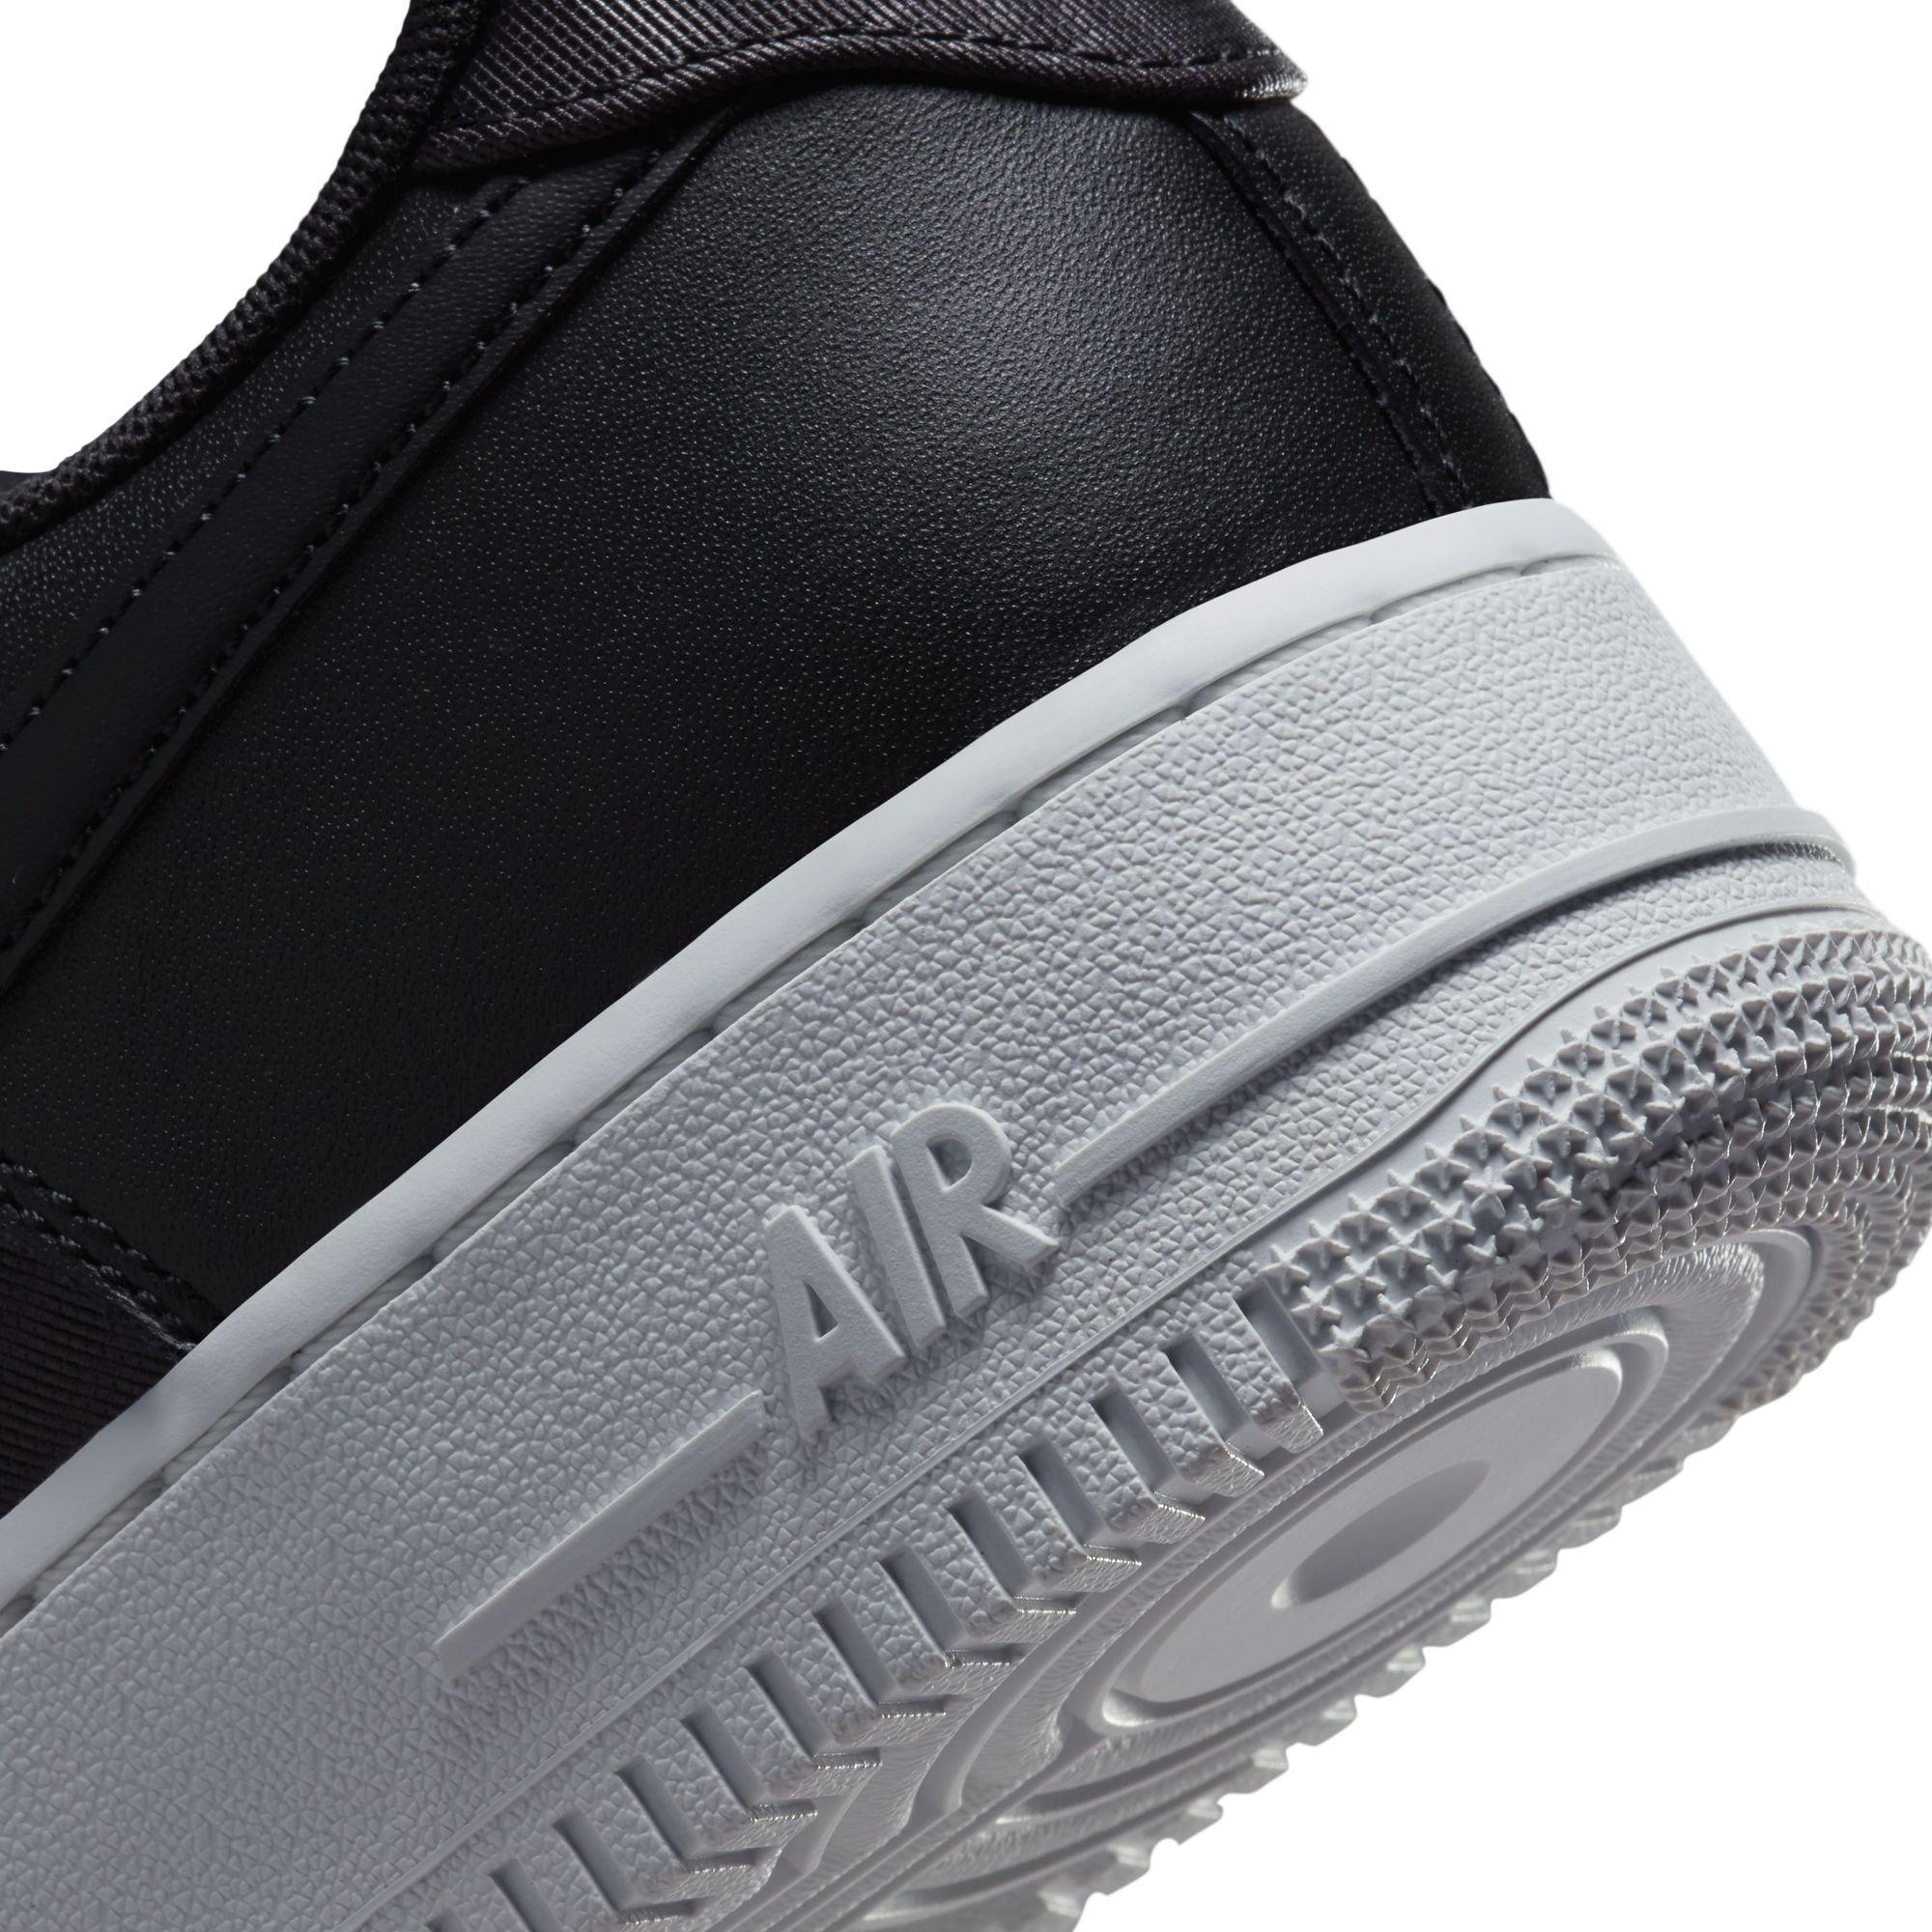 Nike Air Force 1 '07 LV8 Black/Summit White Men's Shoes, Size: 8.5